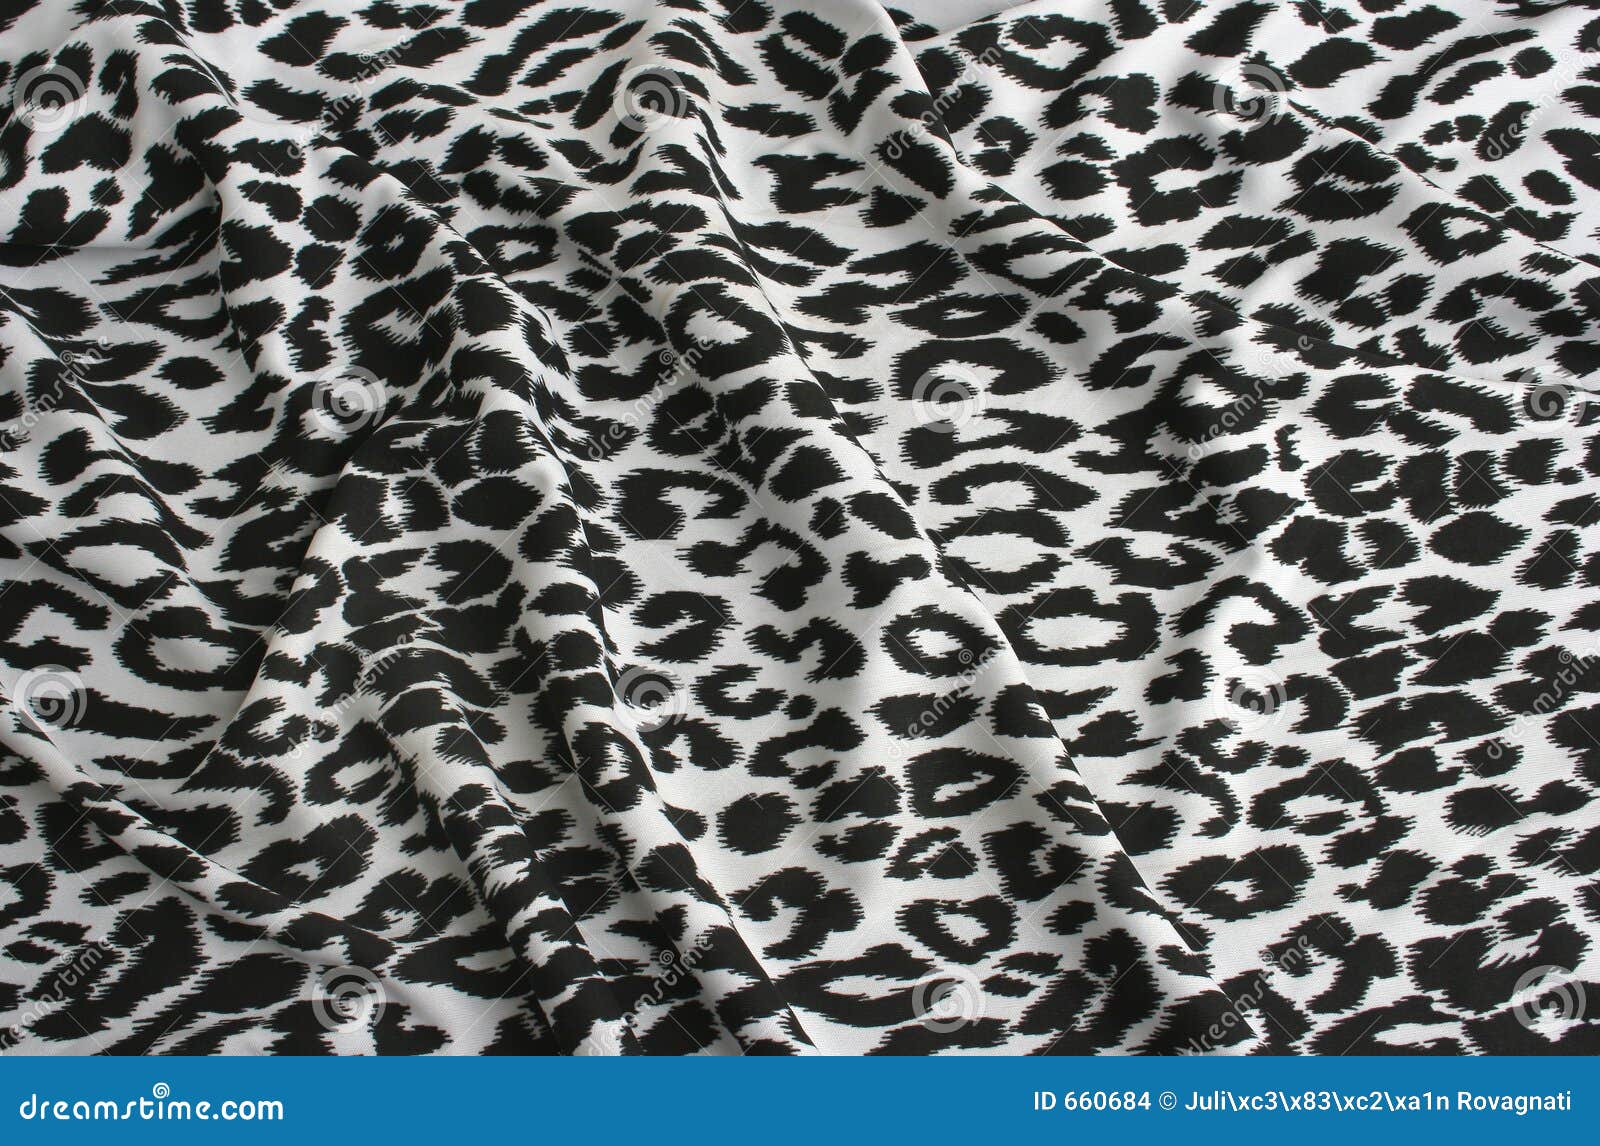 Animal print on fabric stock photo. Image of abstract, text - 660684